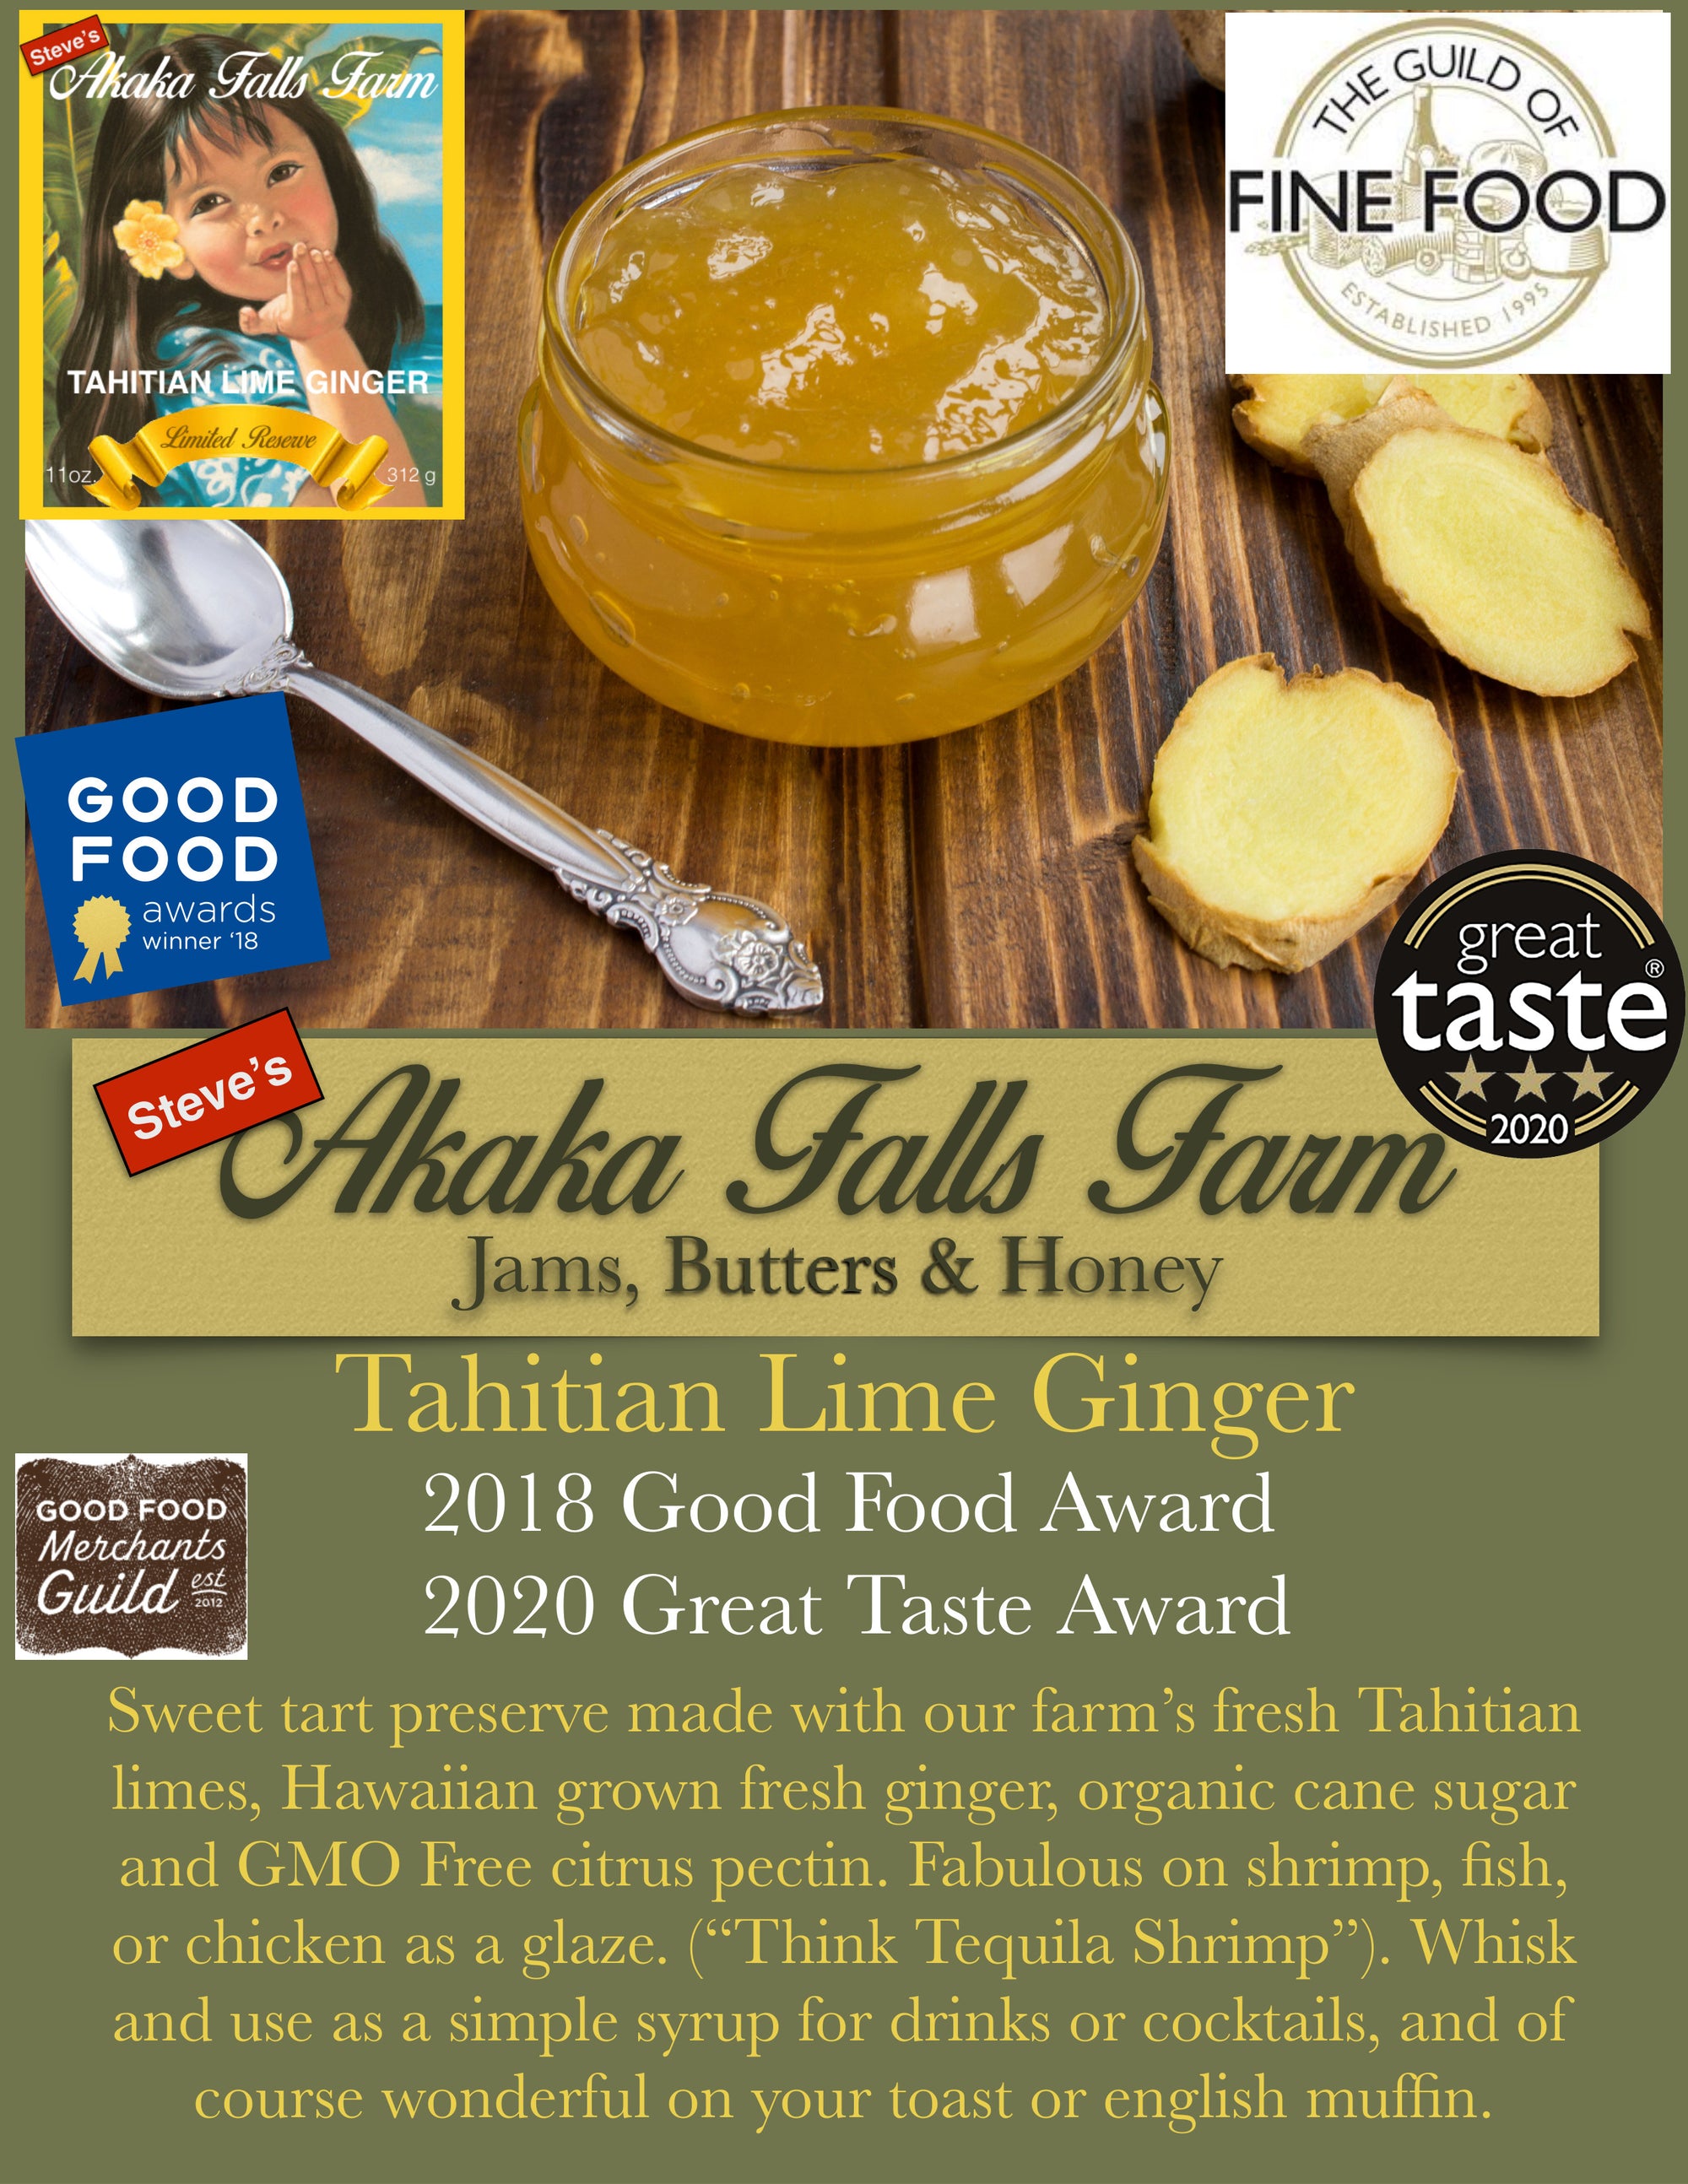 Pop-Up Mākeke - Akaka Falls Farm - Tahitian Lime Ginger Preserve - Information